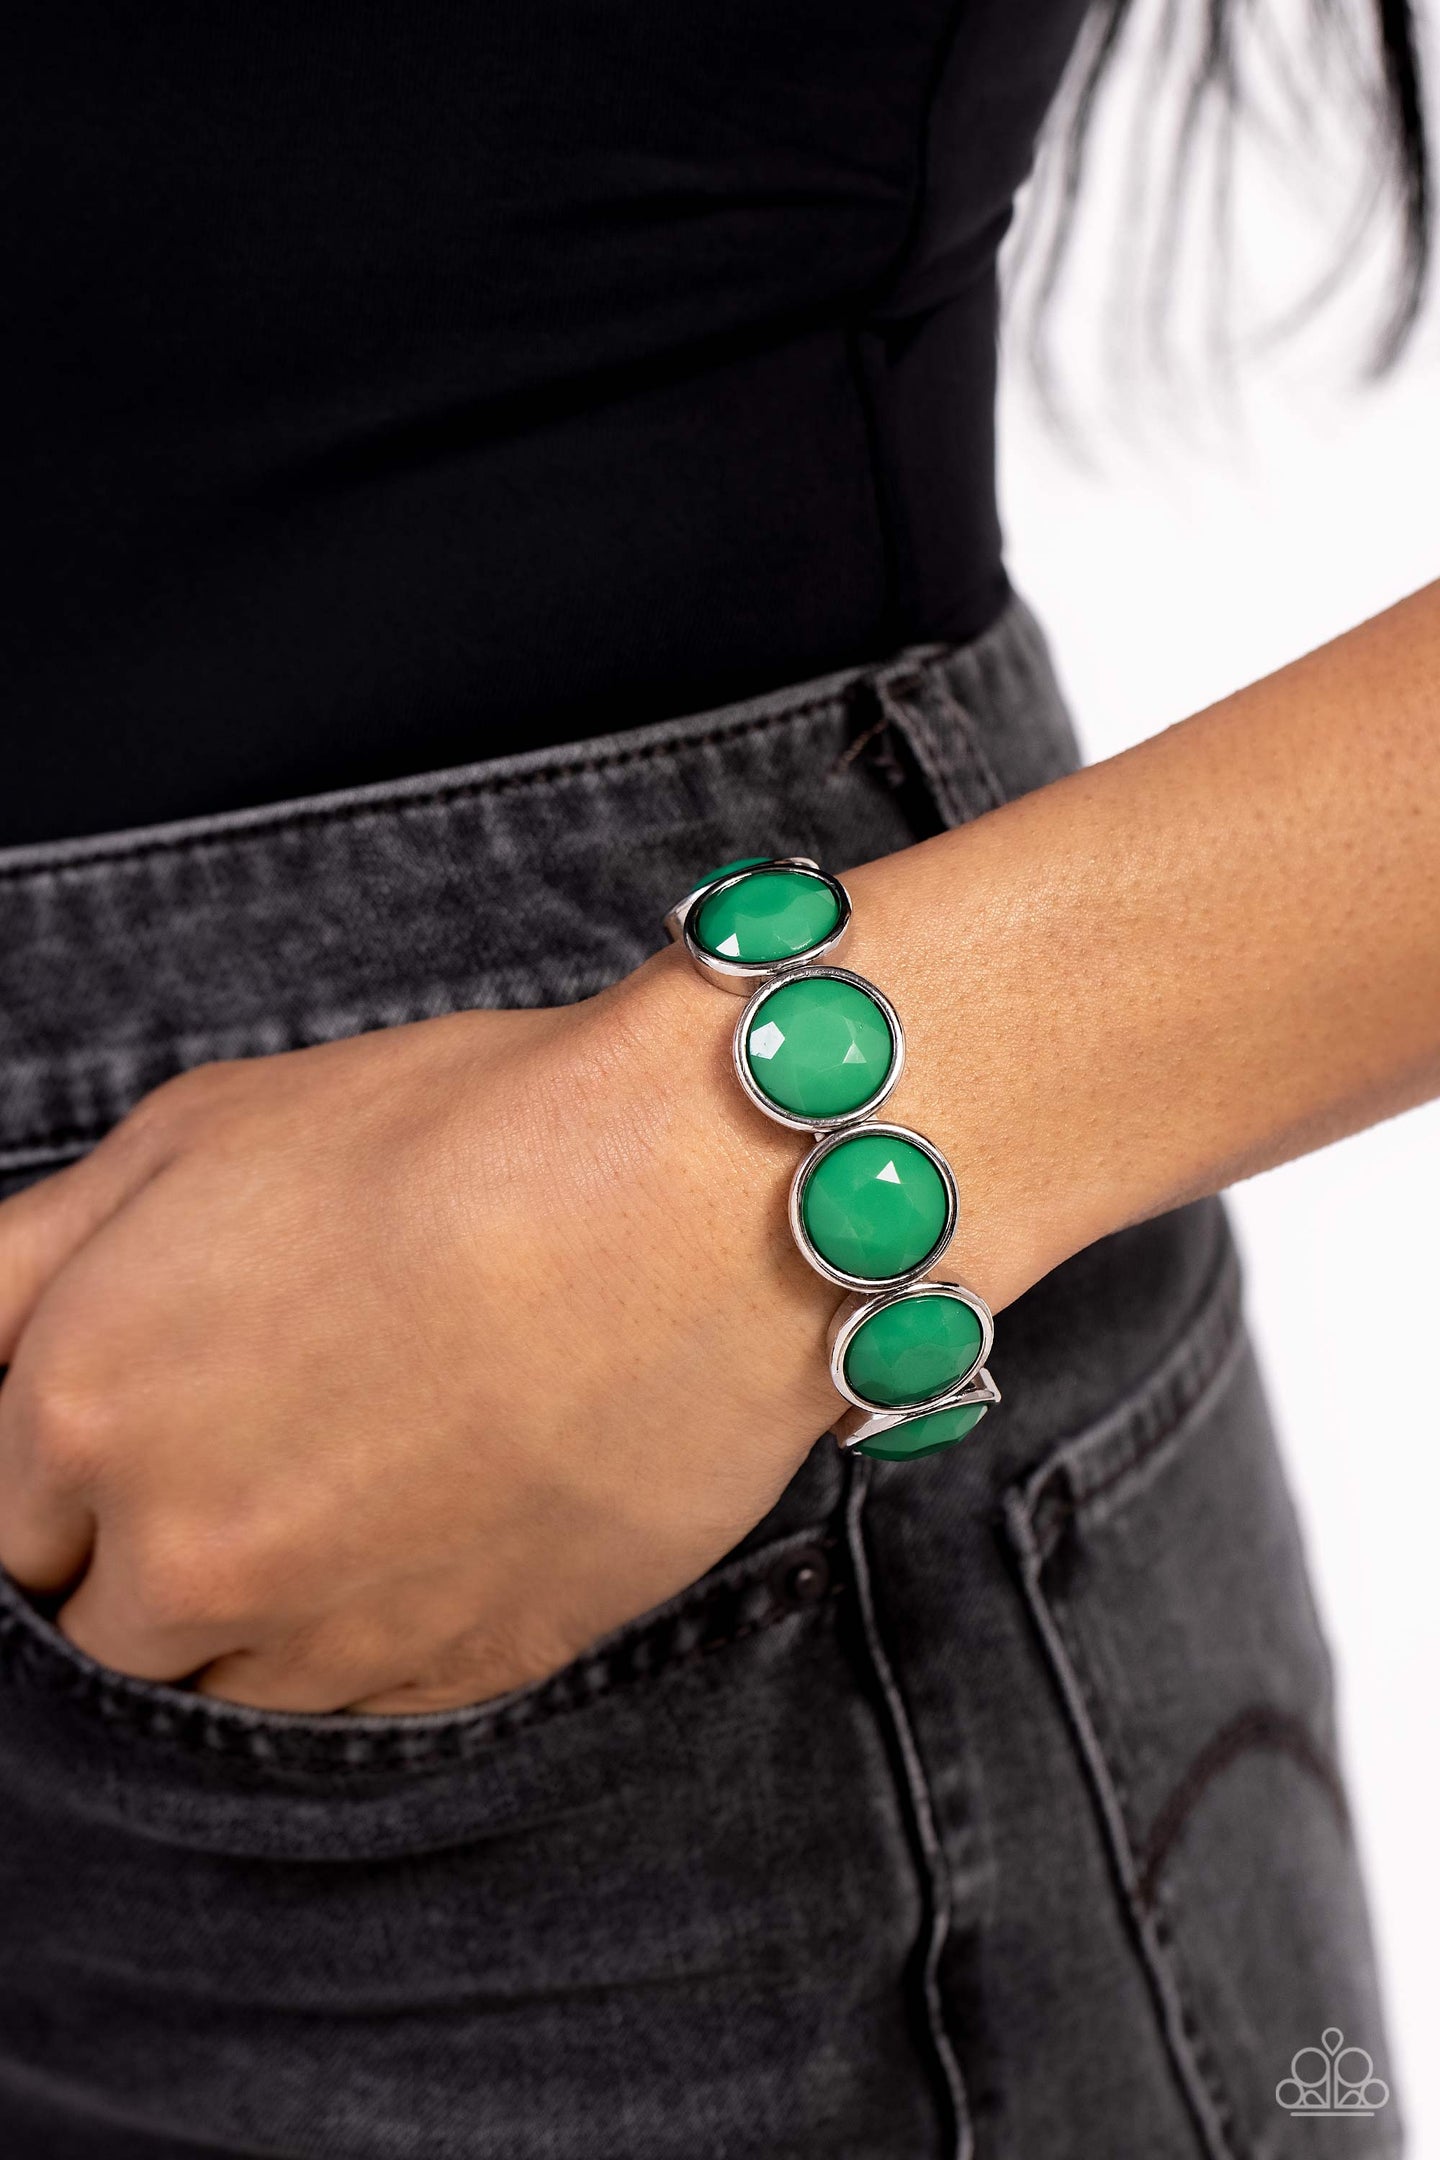 Long Live the Loud - Green bracelet